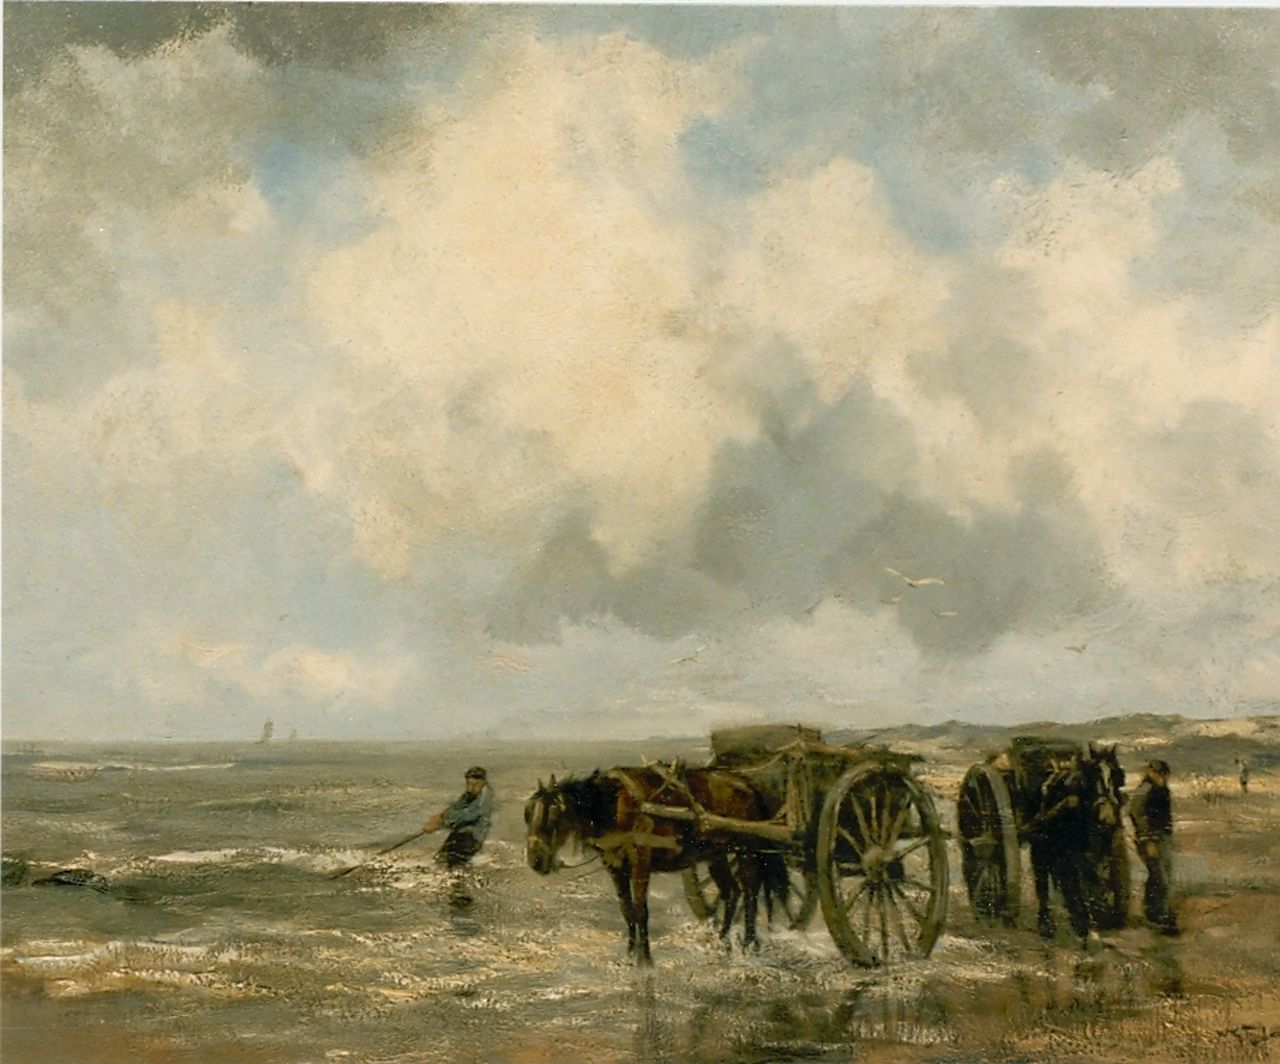 Jansen W.G.F.  | 'Willem' George Frederik Jansen, Schelpenvissers op het strand, olieverf op doek 73,5 x 93,1 cm, gesigneerd rechtsonder